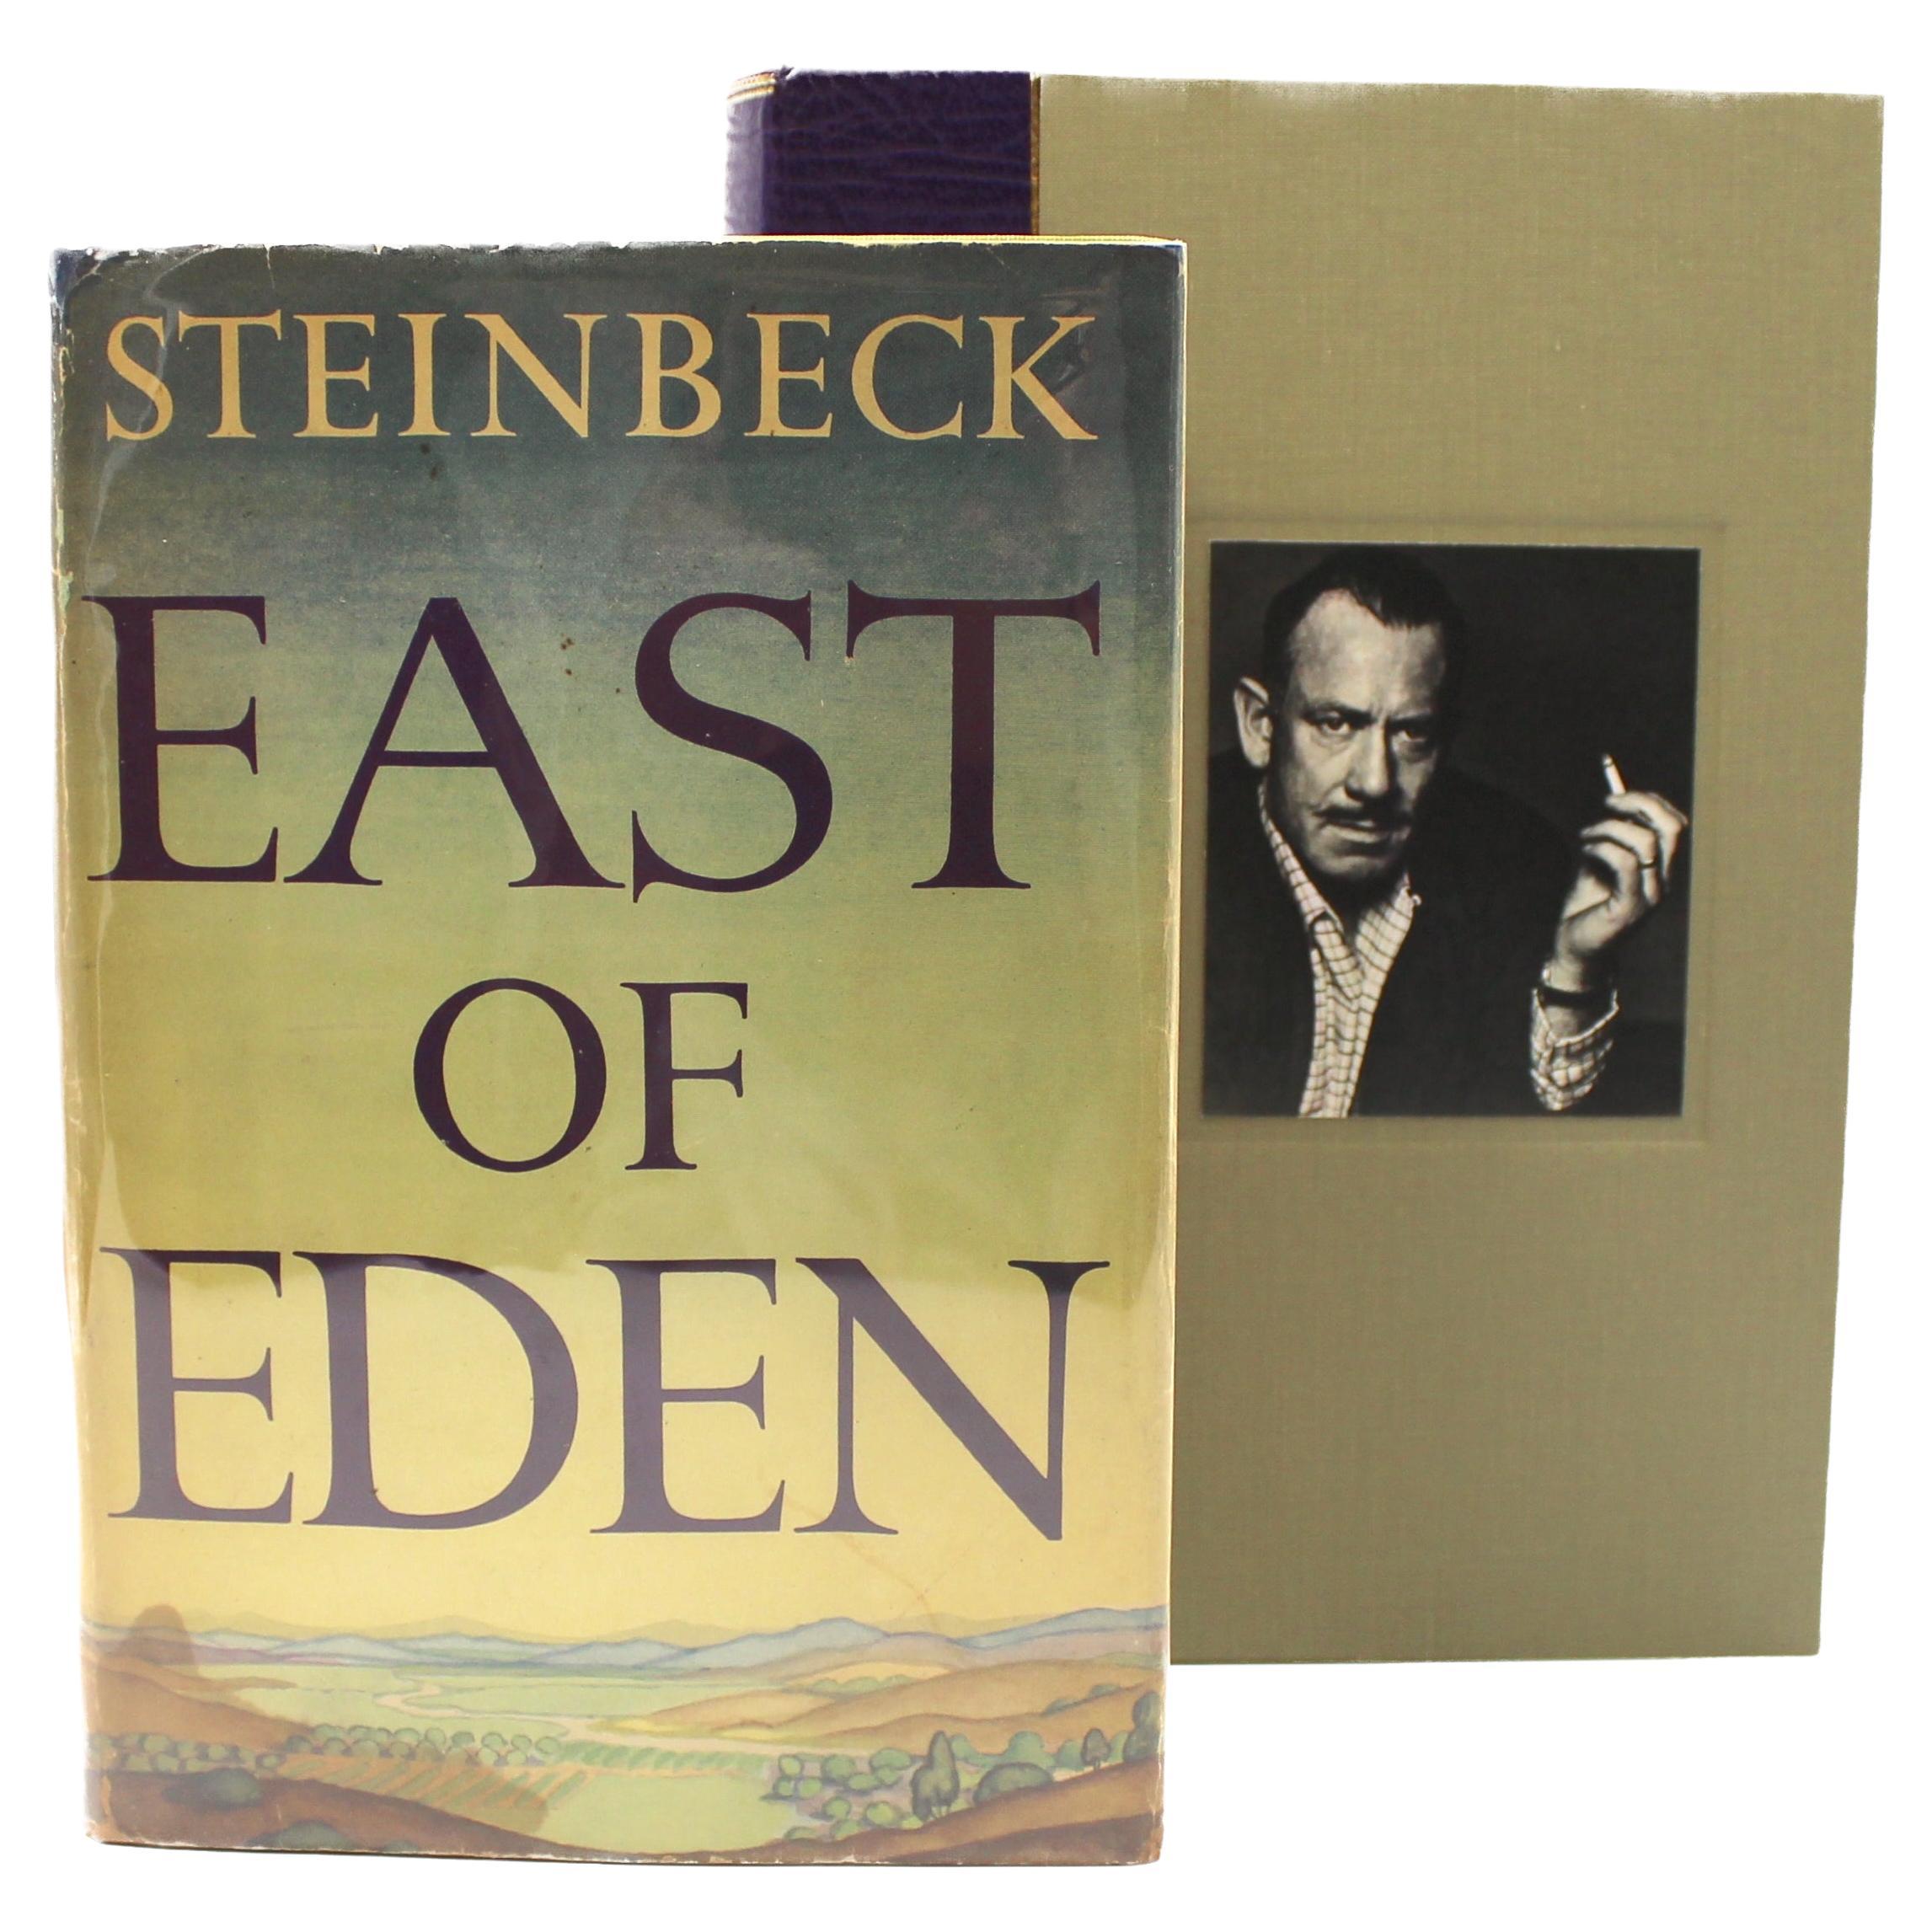 East of Eden by John Steinbeck, First Trade Edition, in Original DJ, 1952